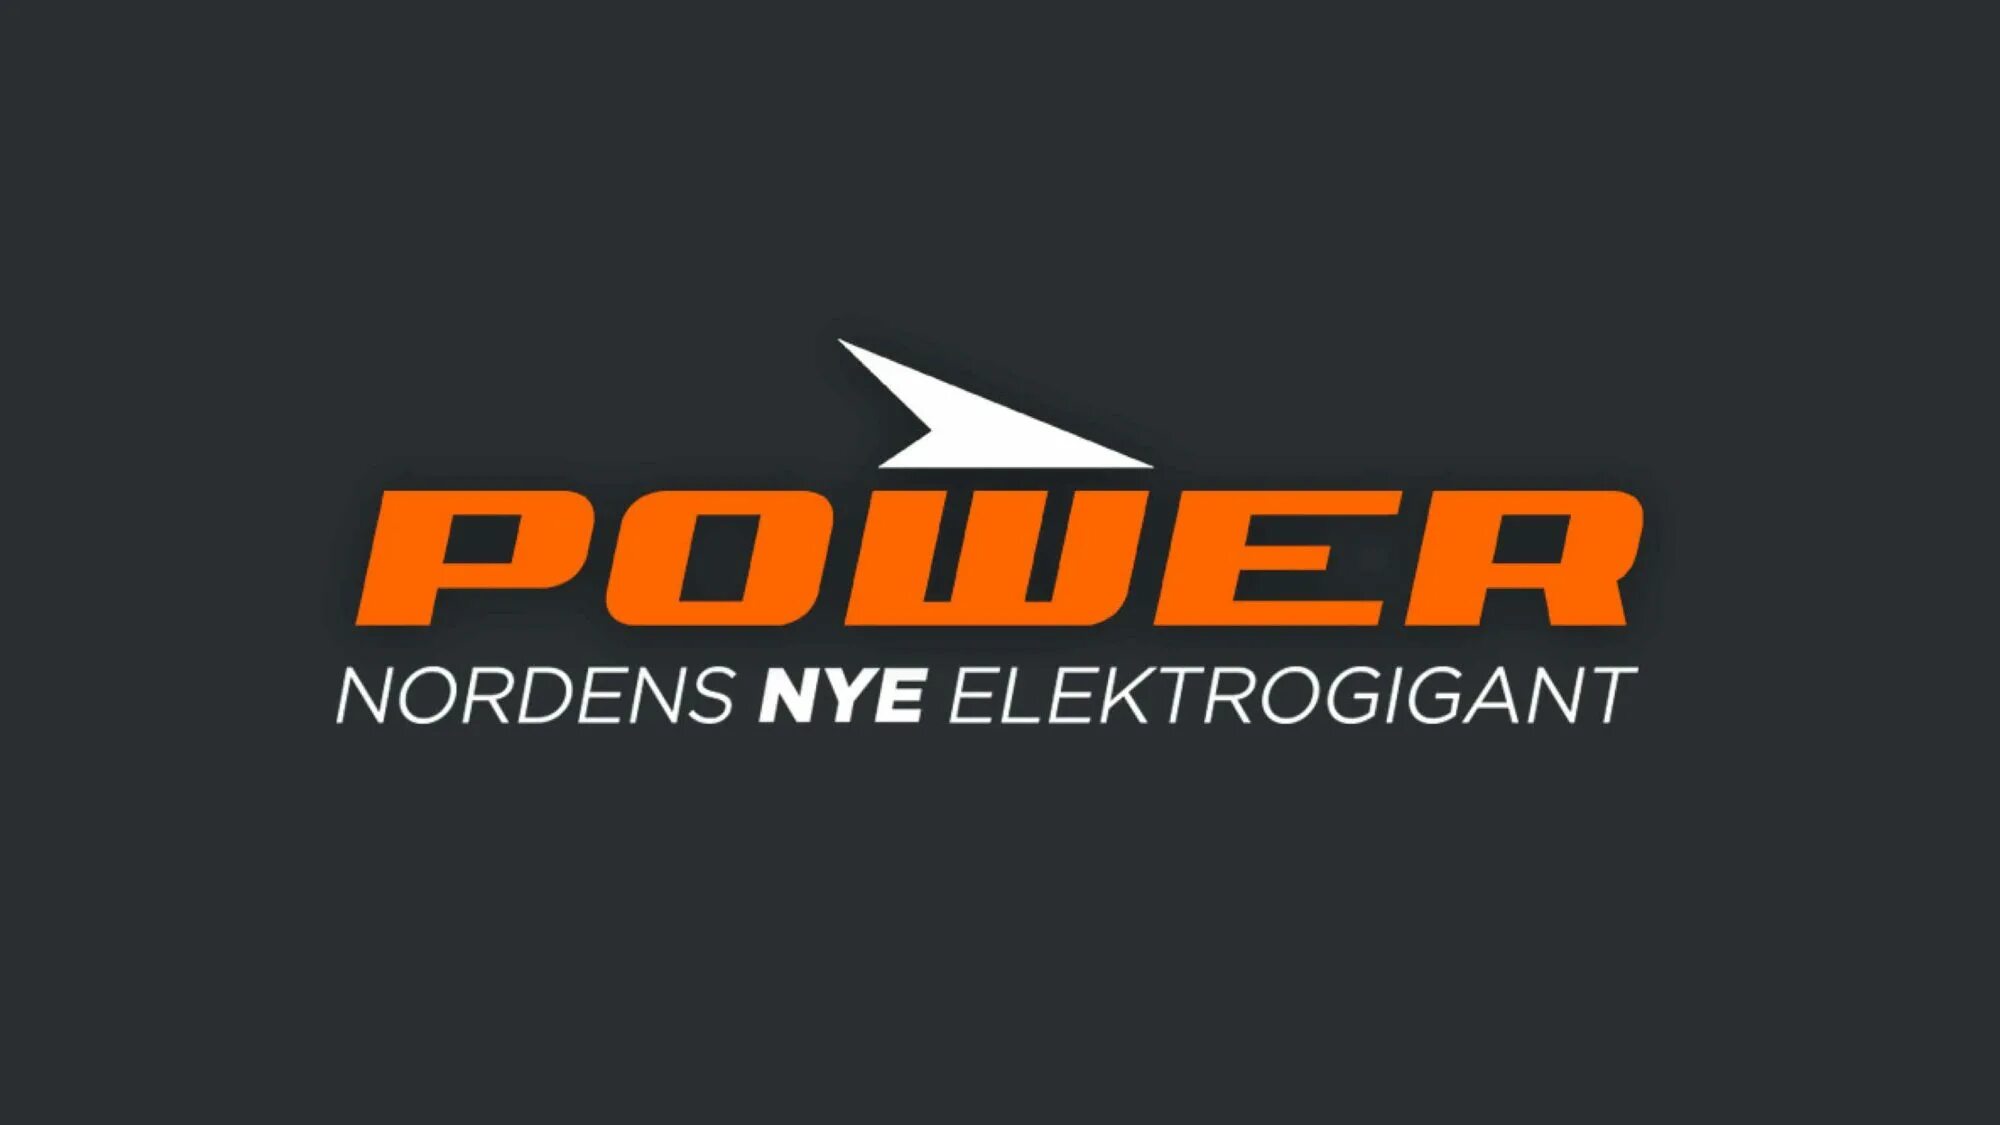 Картинка повер. Эмблема Power. E-Power эмблема. KPOWER логотип. REDPOWER логотип.